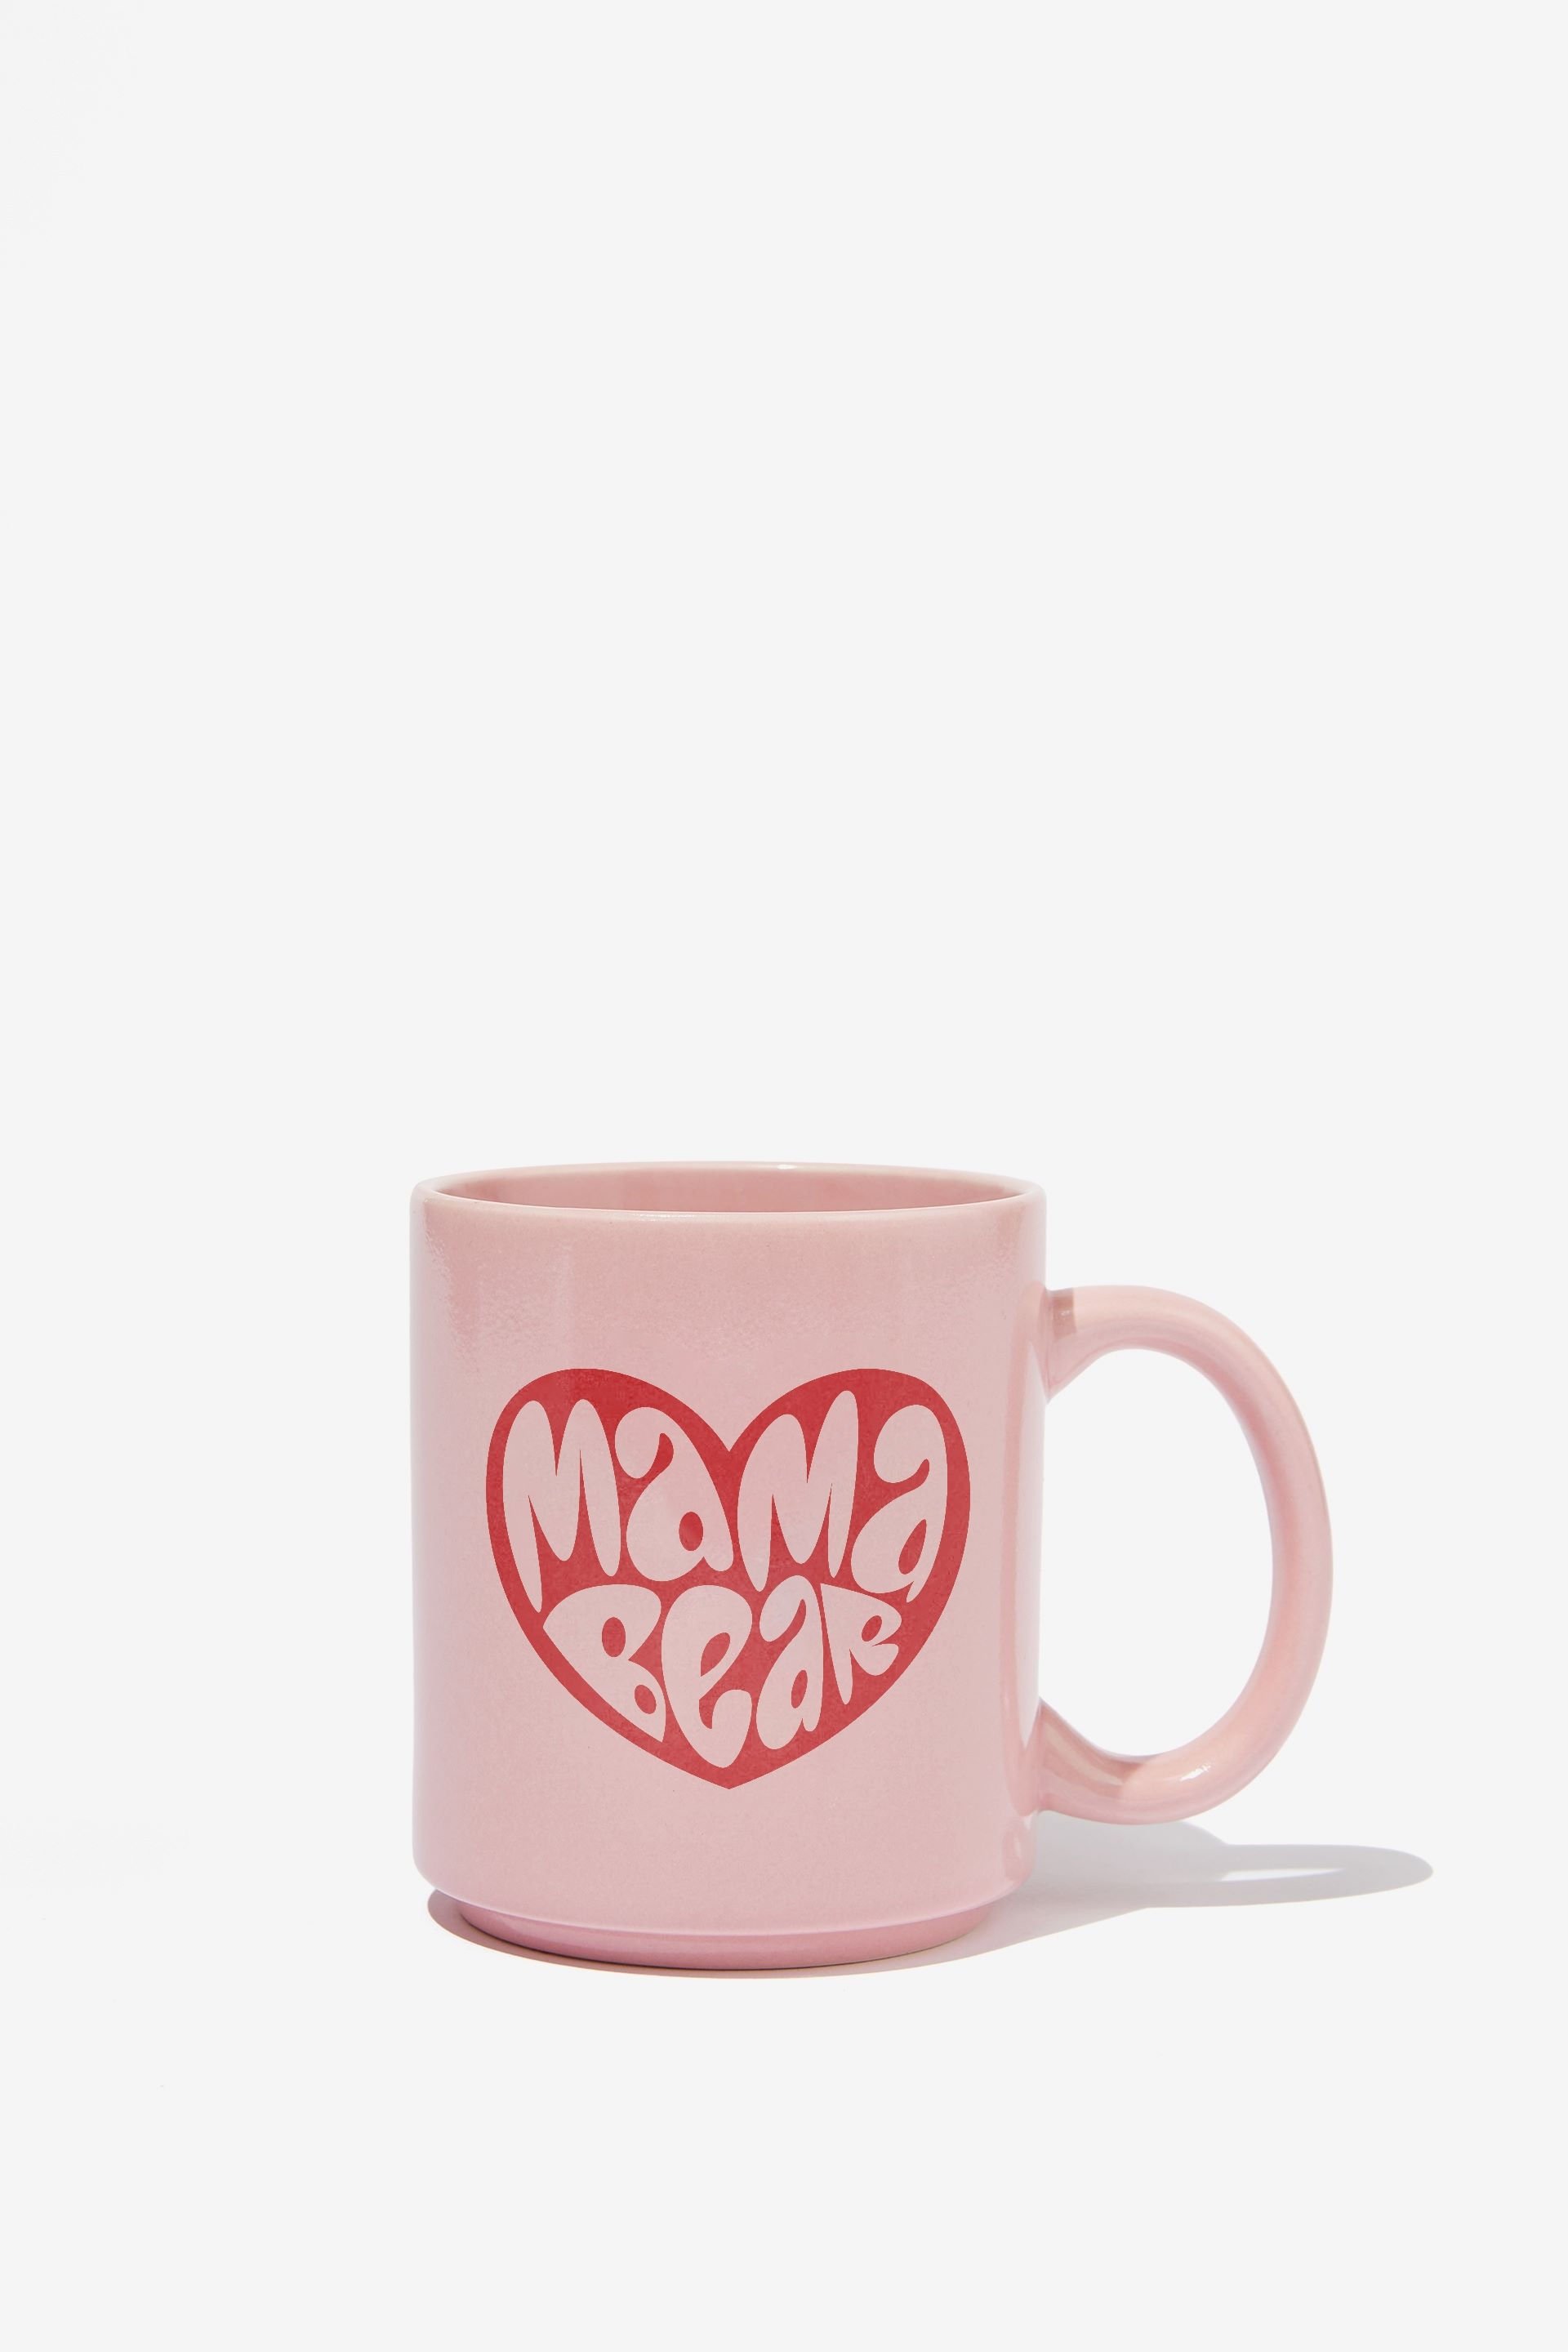 Typo - Limited Edition Mothers Day Mug - Mama bear rosa powder